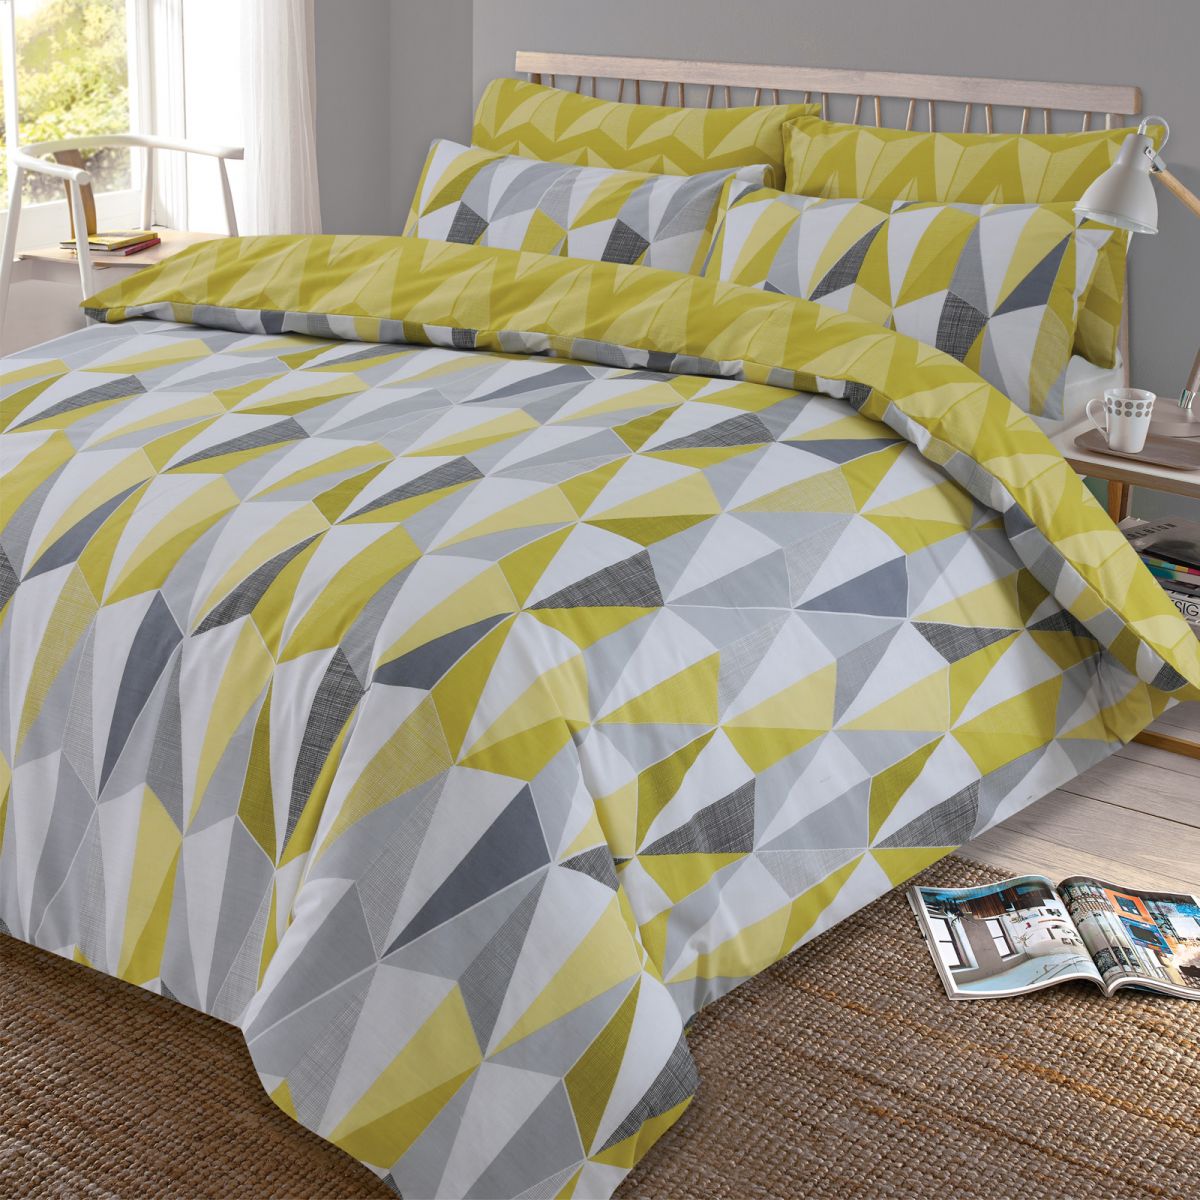 Dreamscene Billie Duvet Cover with Pillowcase Reversible Geometric Triangle Bedding Set, Yellow Ochre Grey - Superking